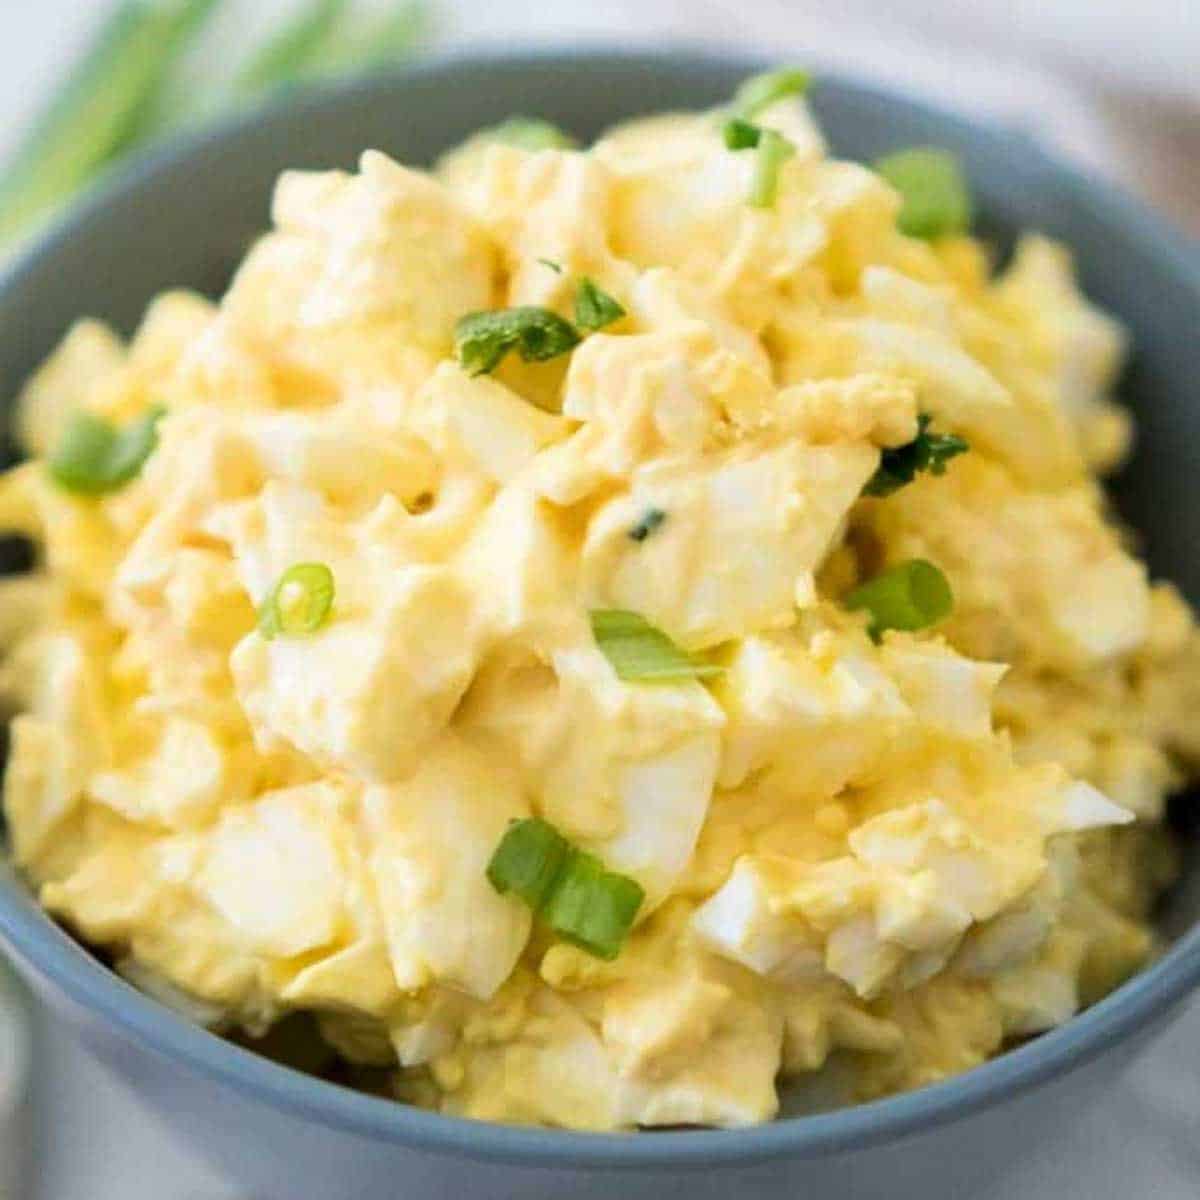 https://thehappierhomemaker.com/wp-content/uploads/2019/08/easy-egg-salad-recipe-featured.jpg